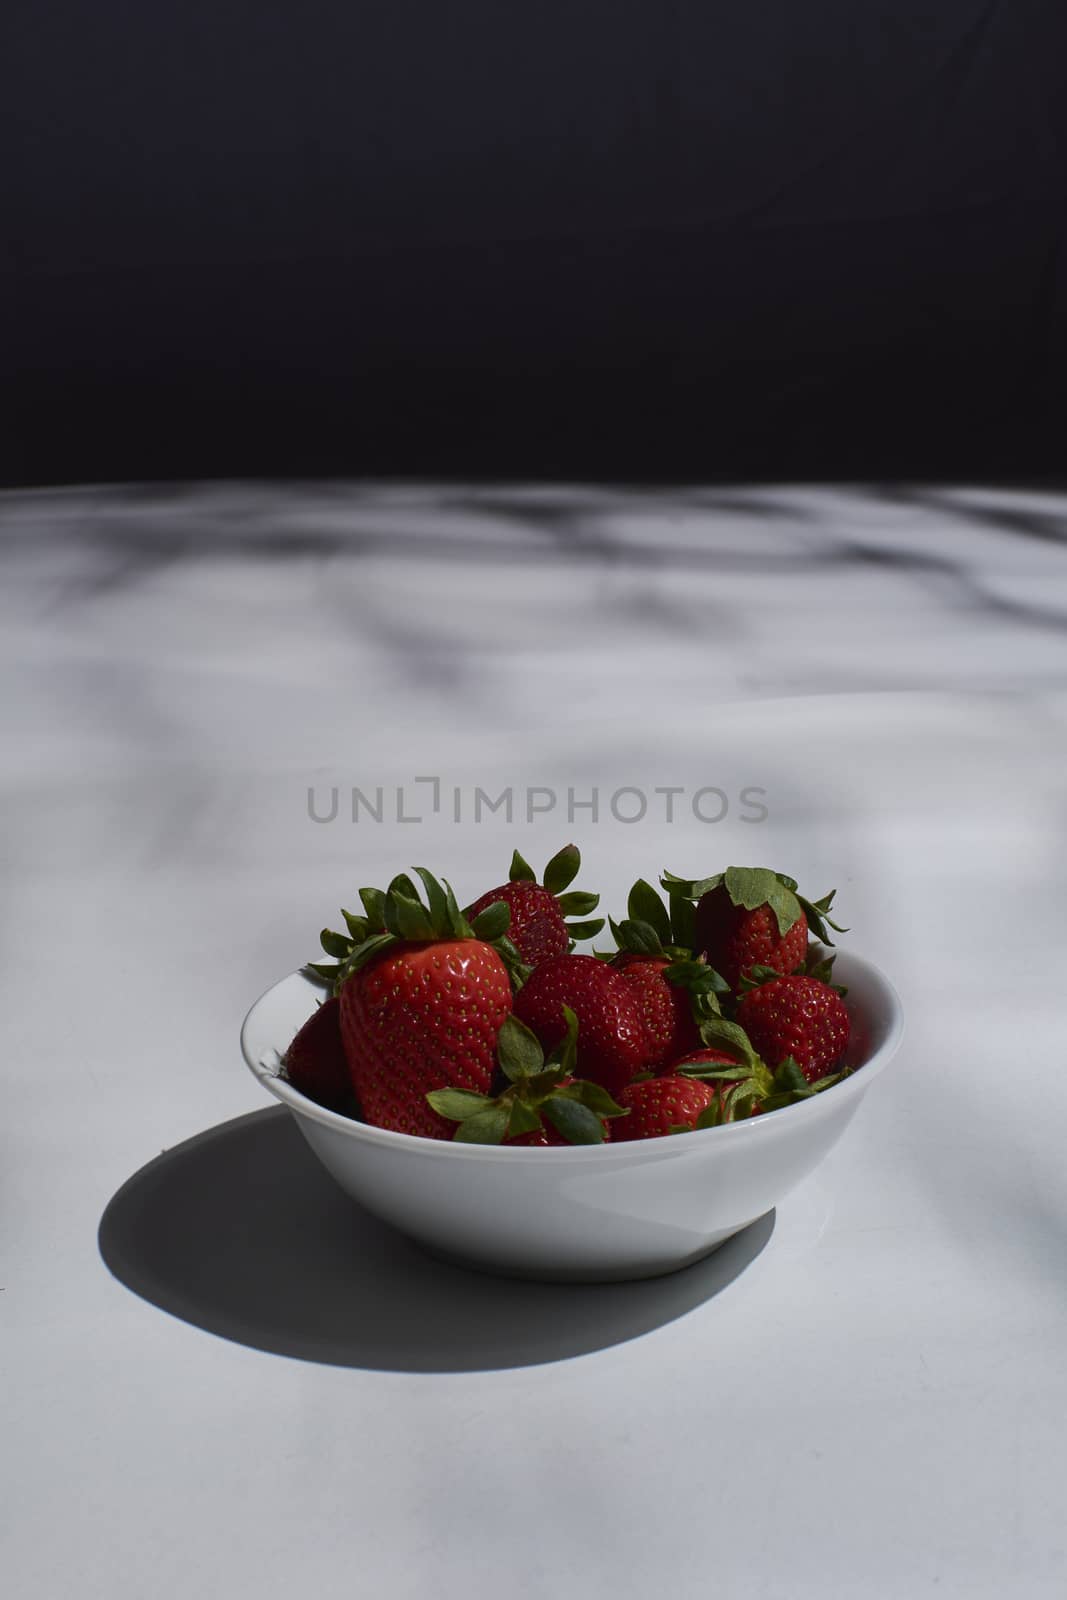 Bowl full of ripe strawberries ready to eat by raul_ruiz